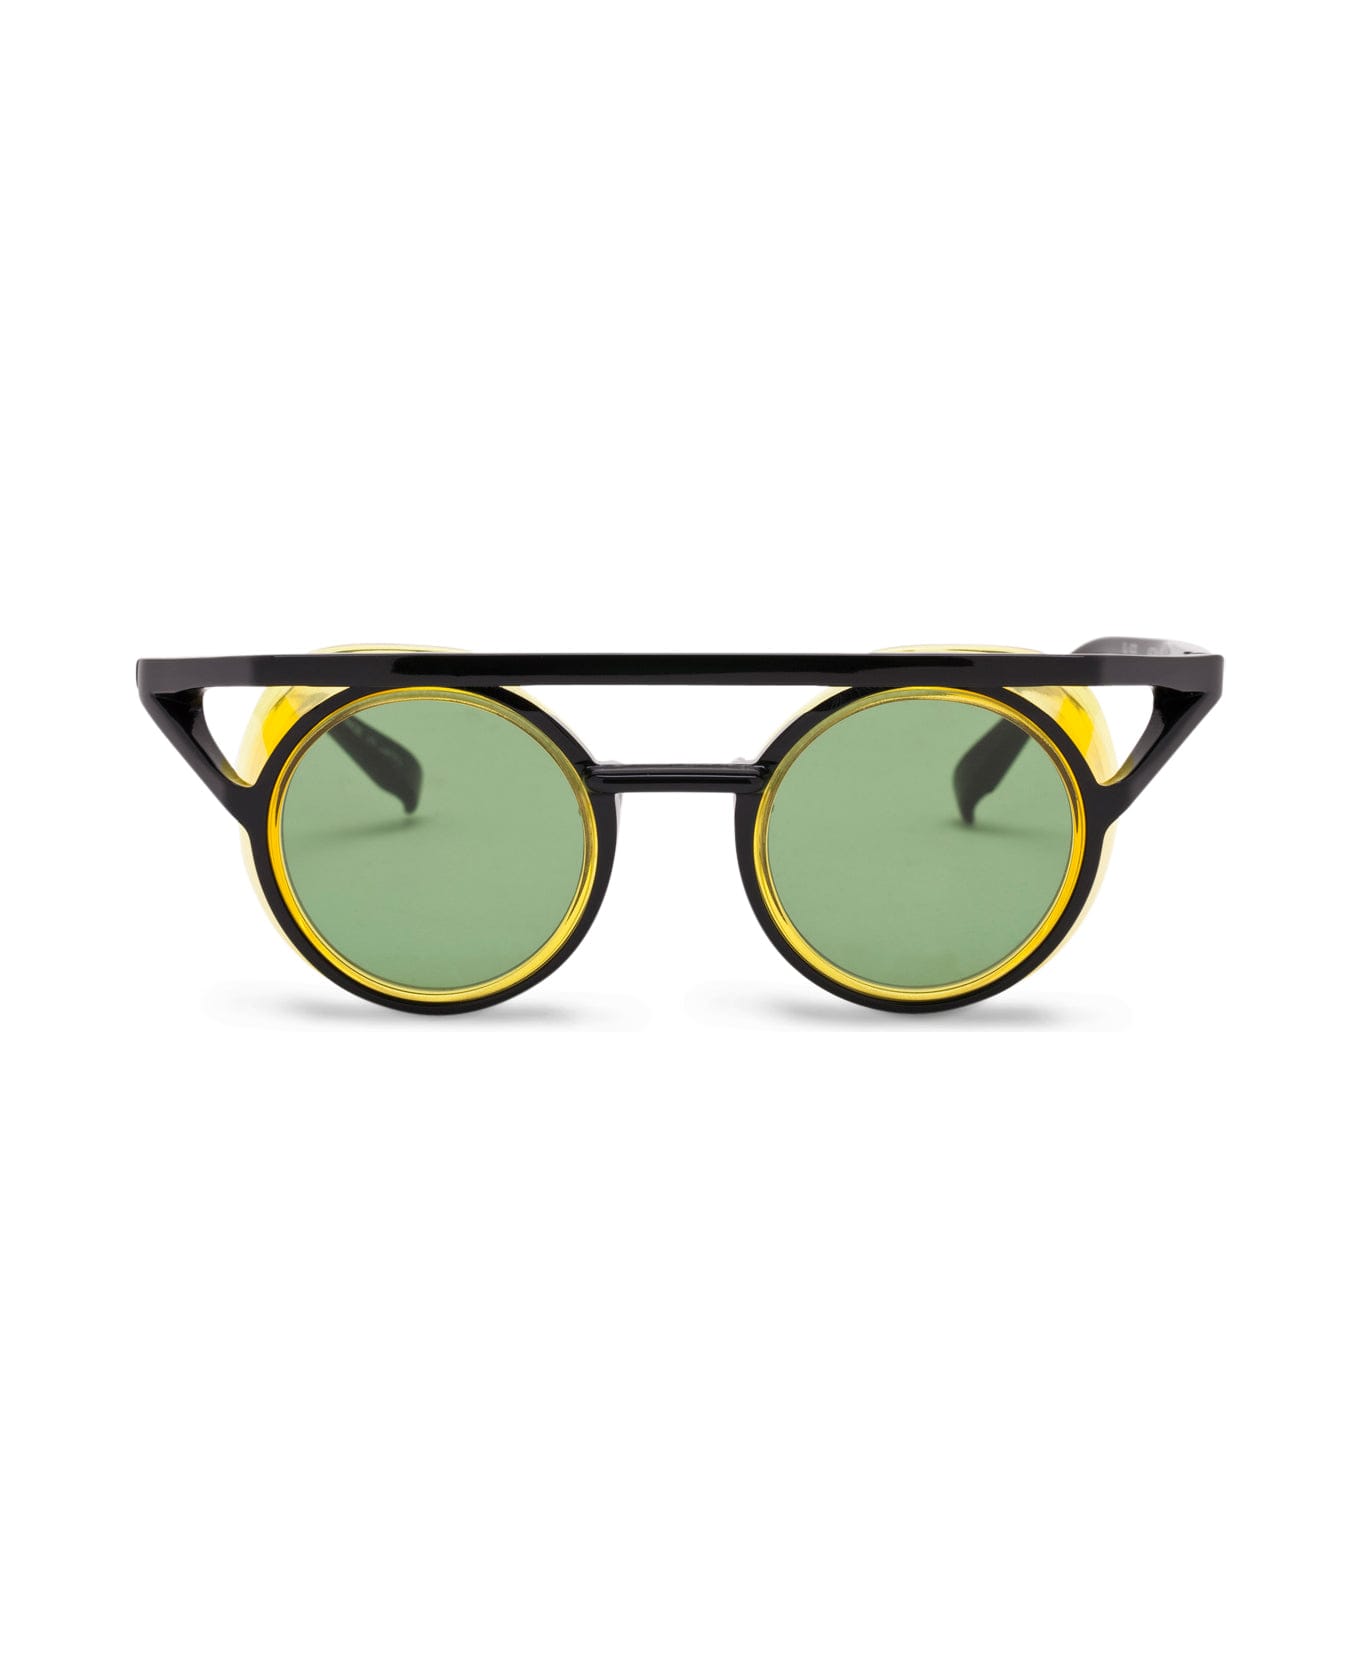 FACTORY900 El 002-001-666 Sunglasses - transparent black/yellow サングラス